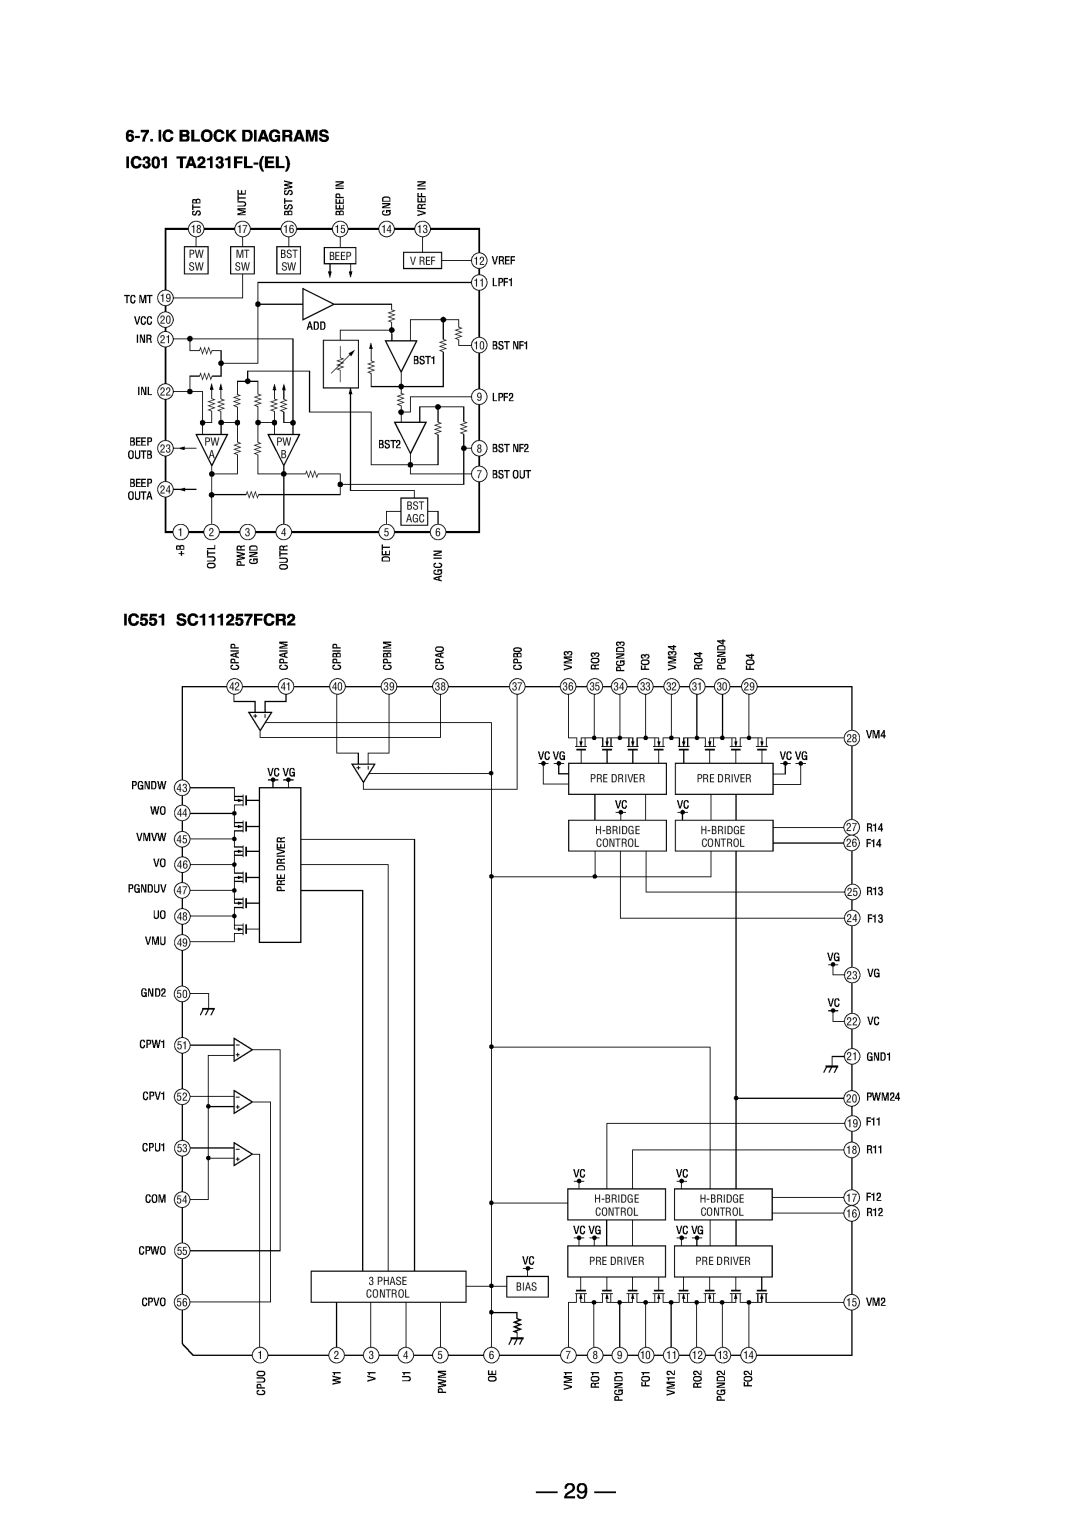 Sony MX-E500 specifications Ic Block Diagrams, IC301 TA2131FL-EL, IC551 SC111257FCR2 